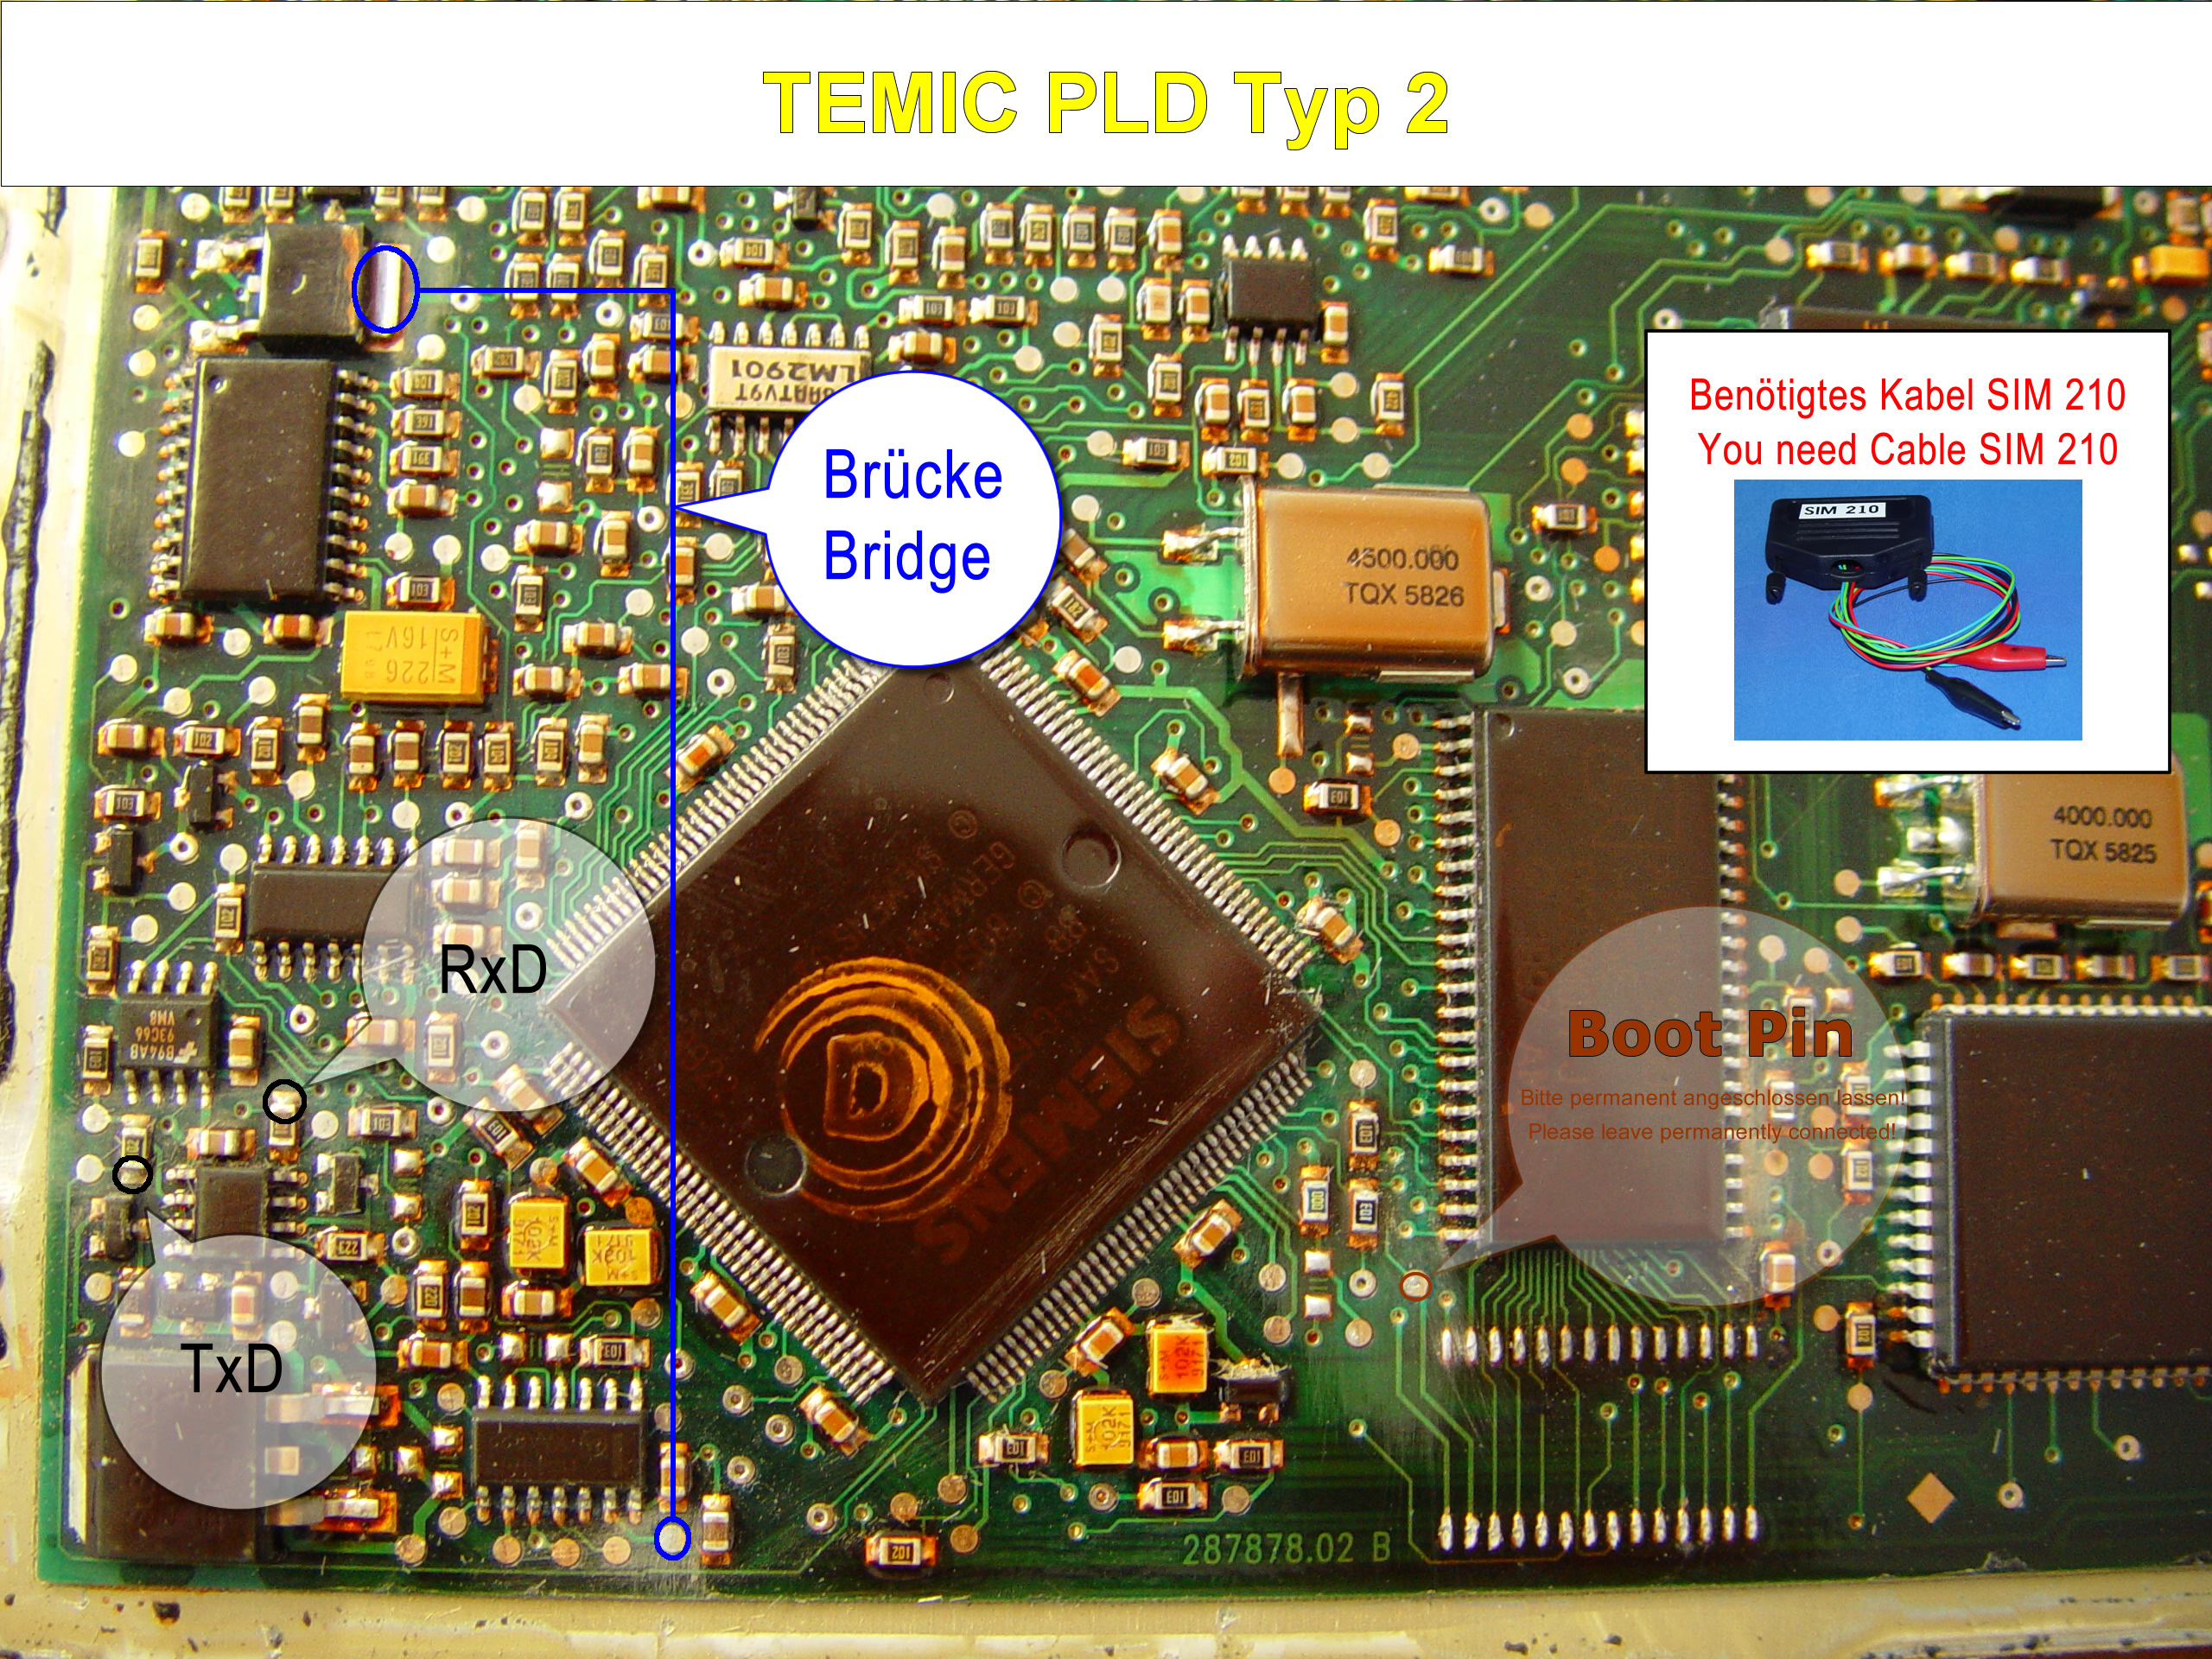 MB Temic PLD TYP2 Boot.jpg